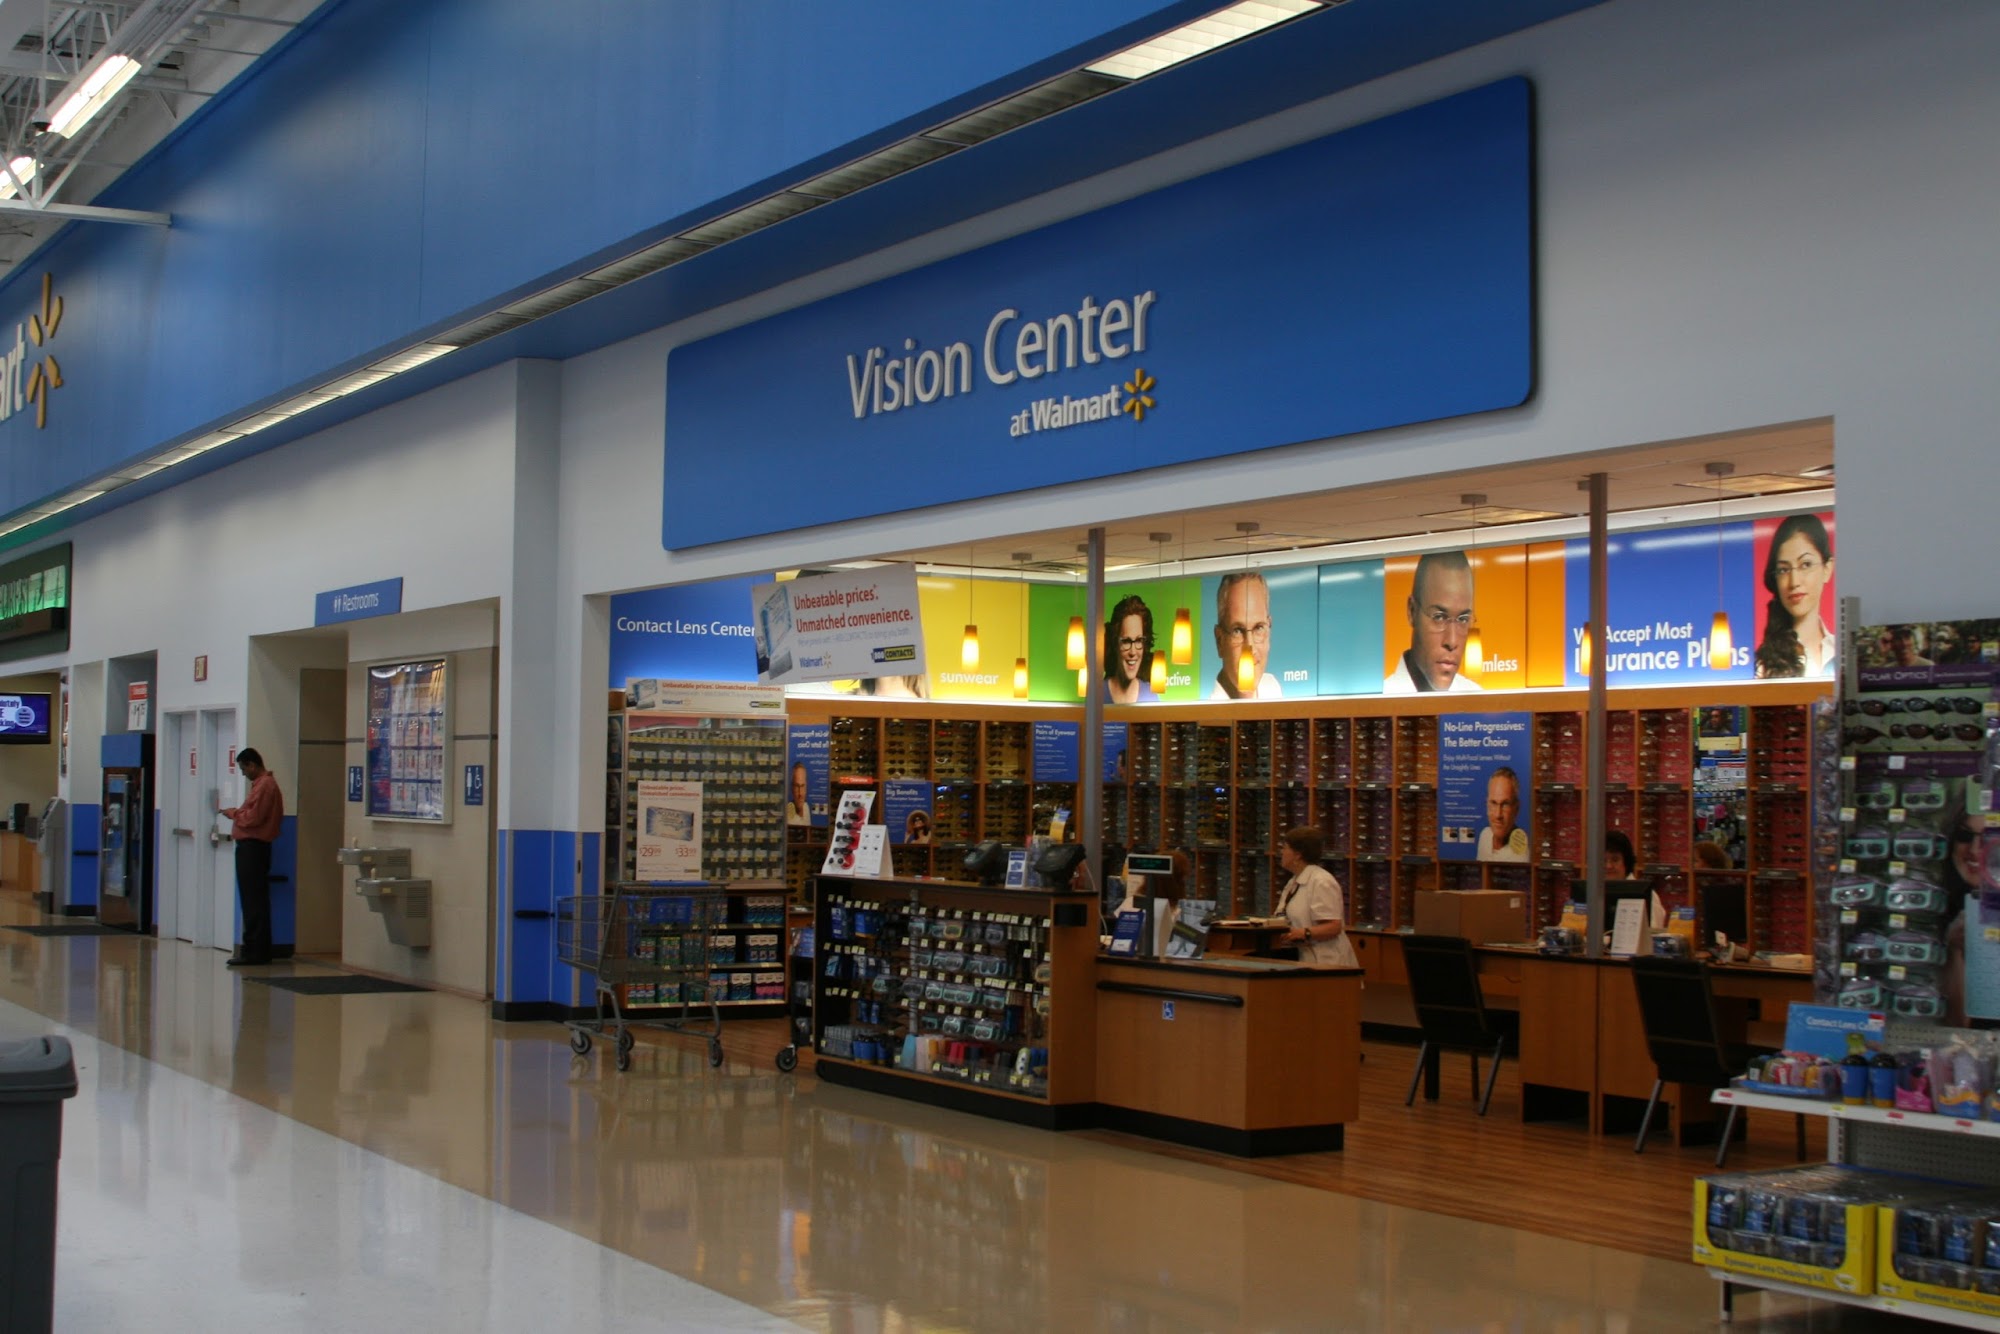 Walmart Vision & Glasses 6700 Hollywood Blvd, Delmont Pennsylvania 15626